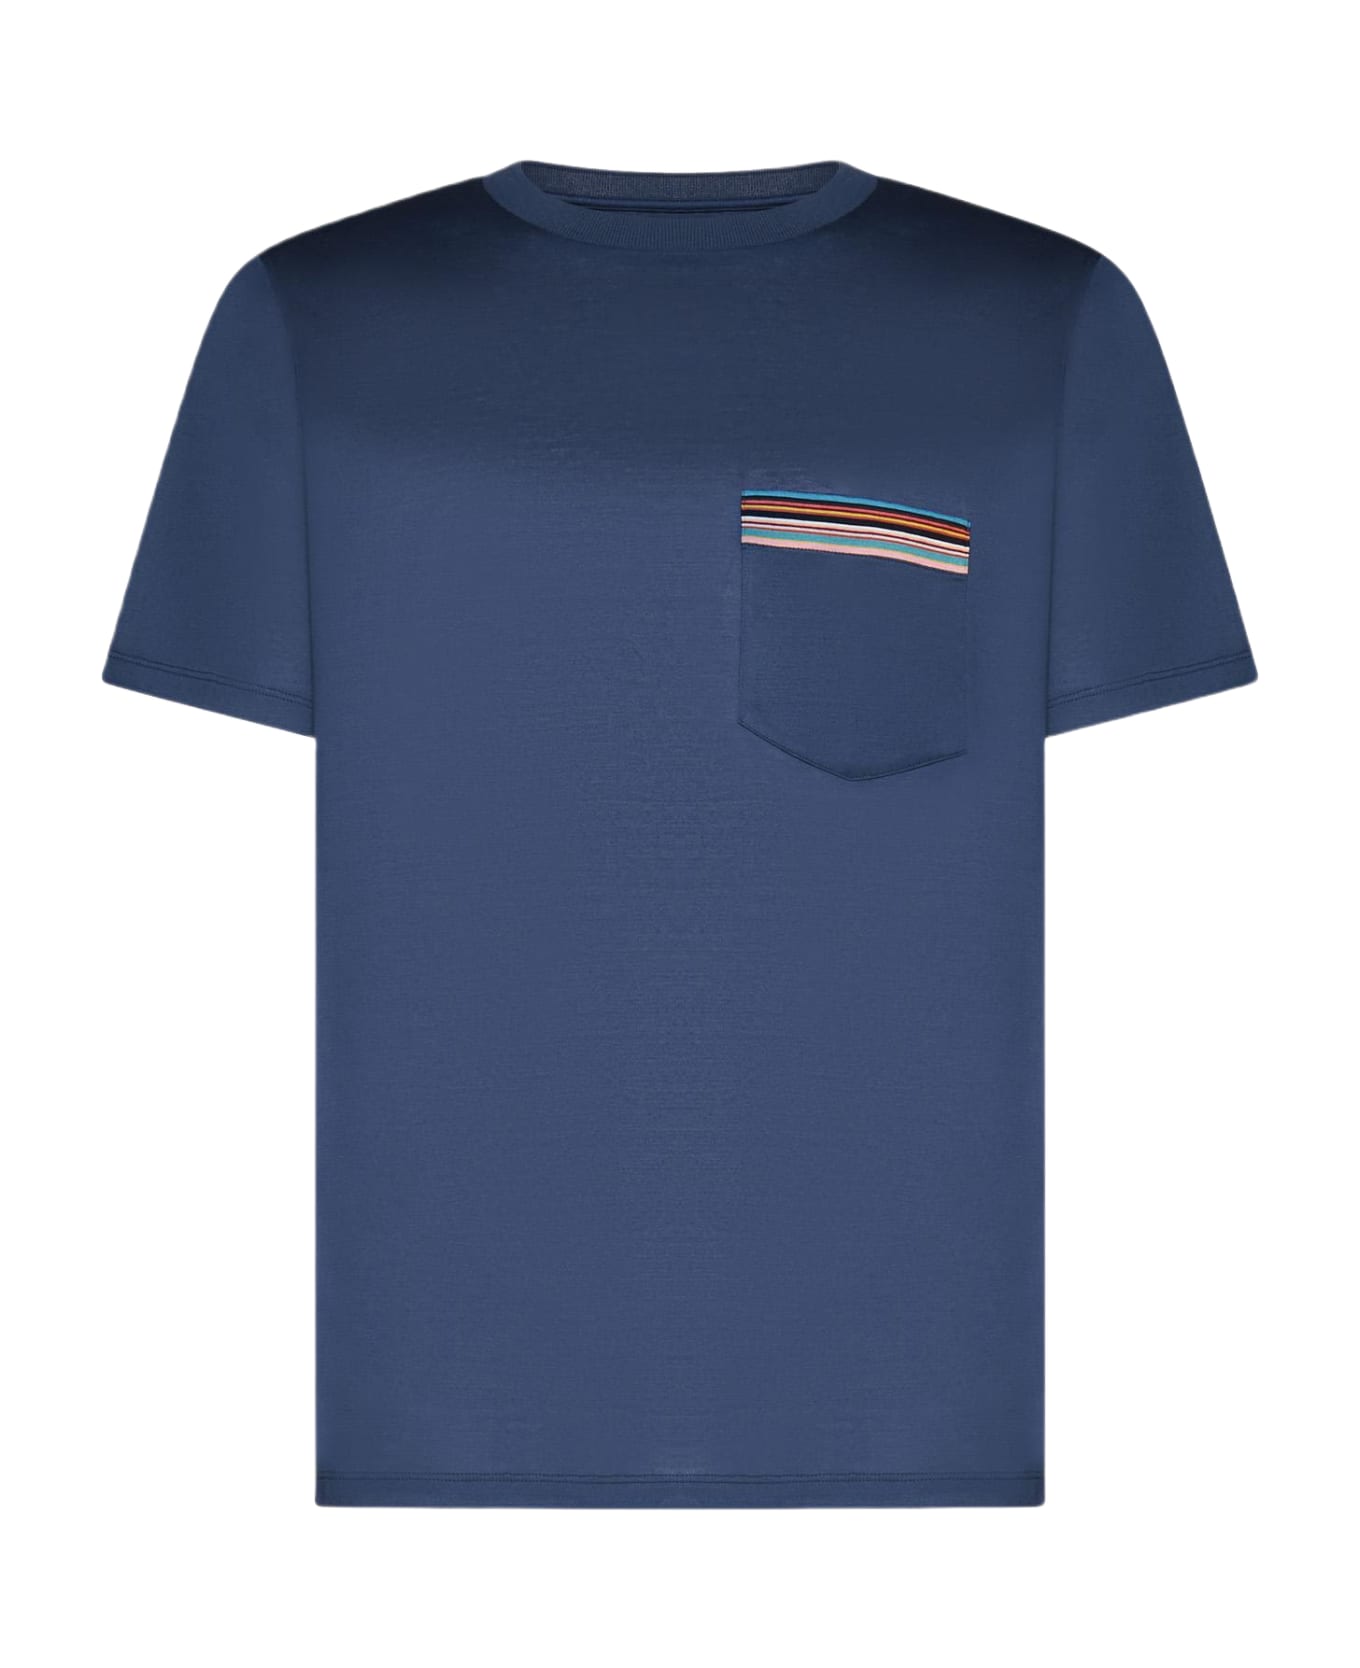 Paul Smith Striped Pocket Cotton T-shirt - NAVY